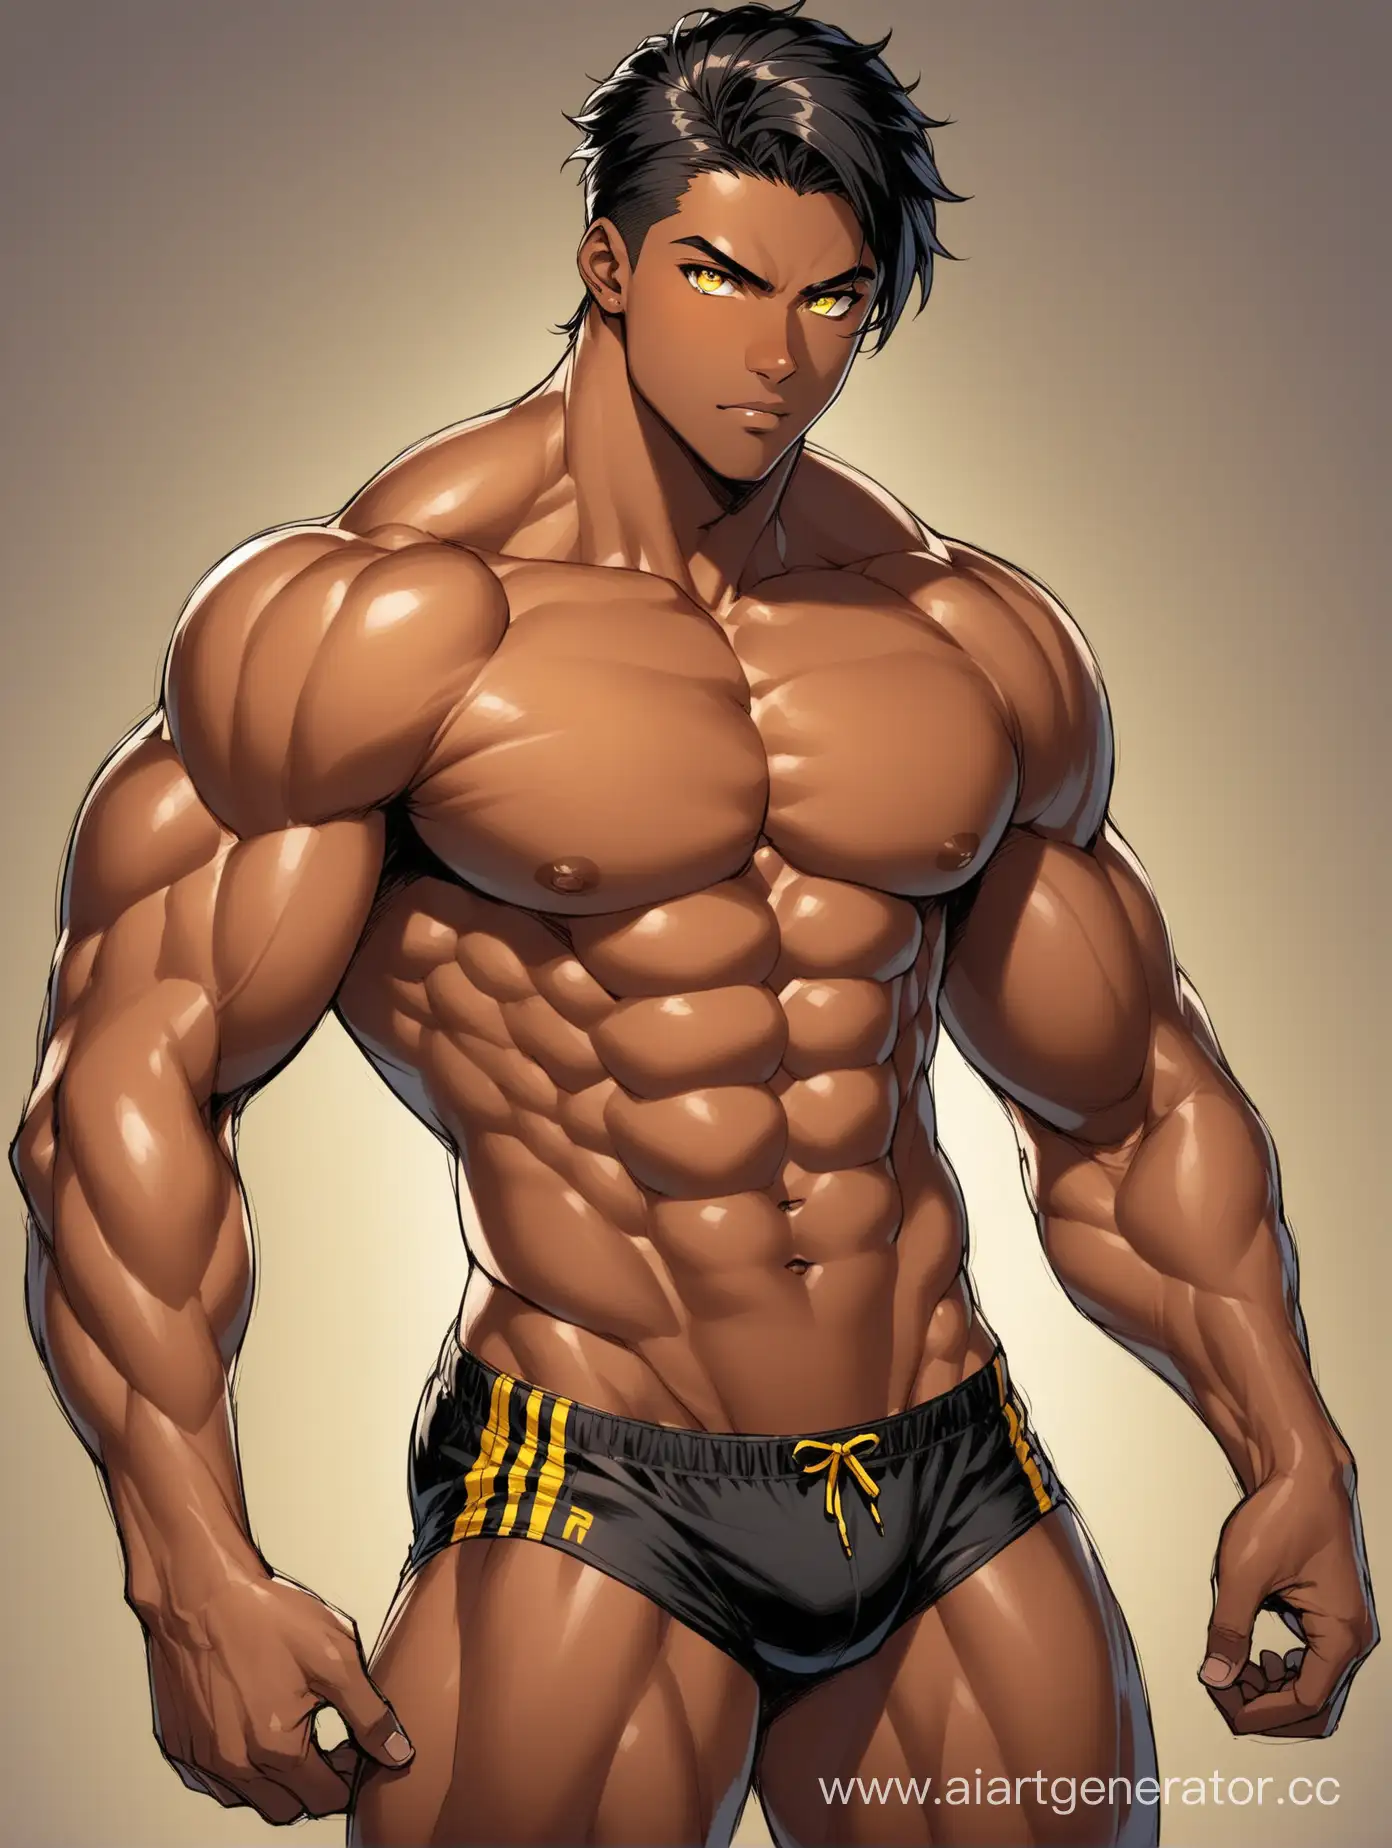 A very muscular young man with dark skin, medium-length black hair, bright yellow eyes.